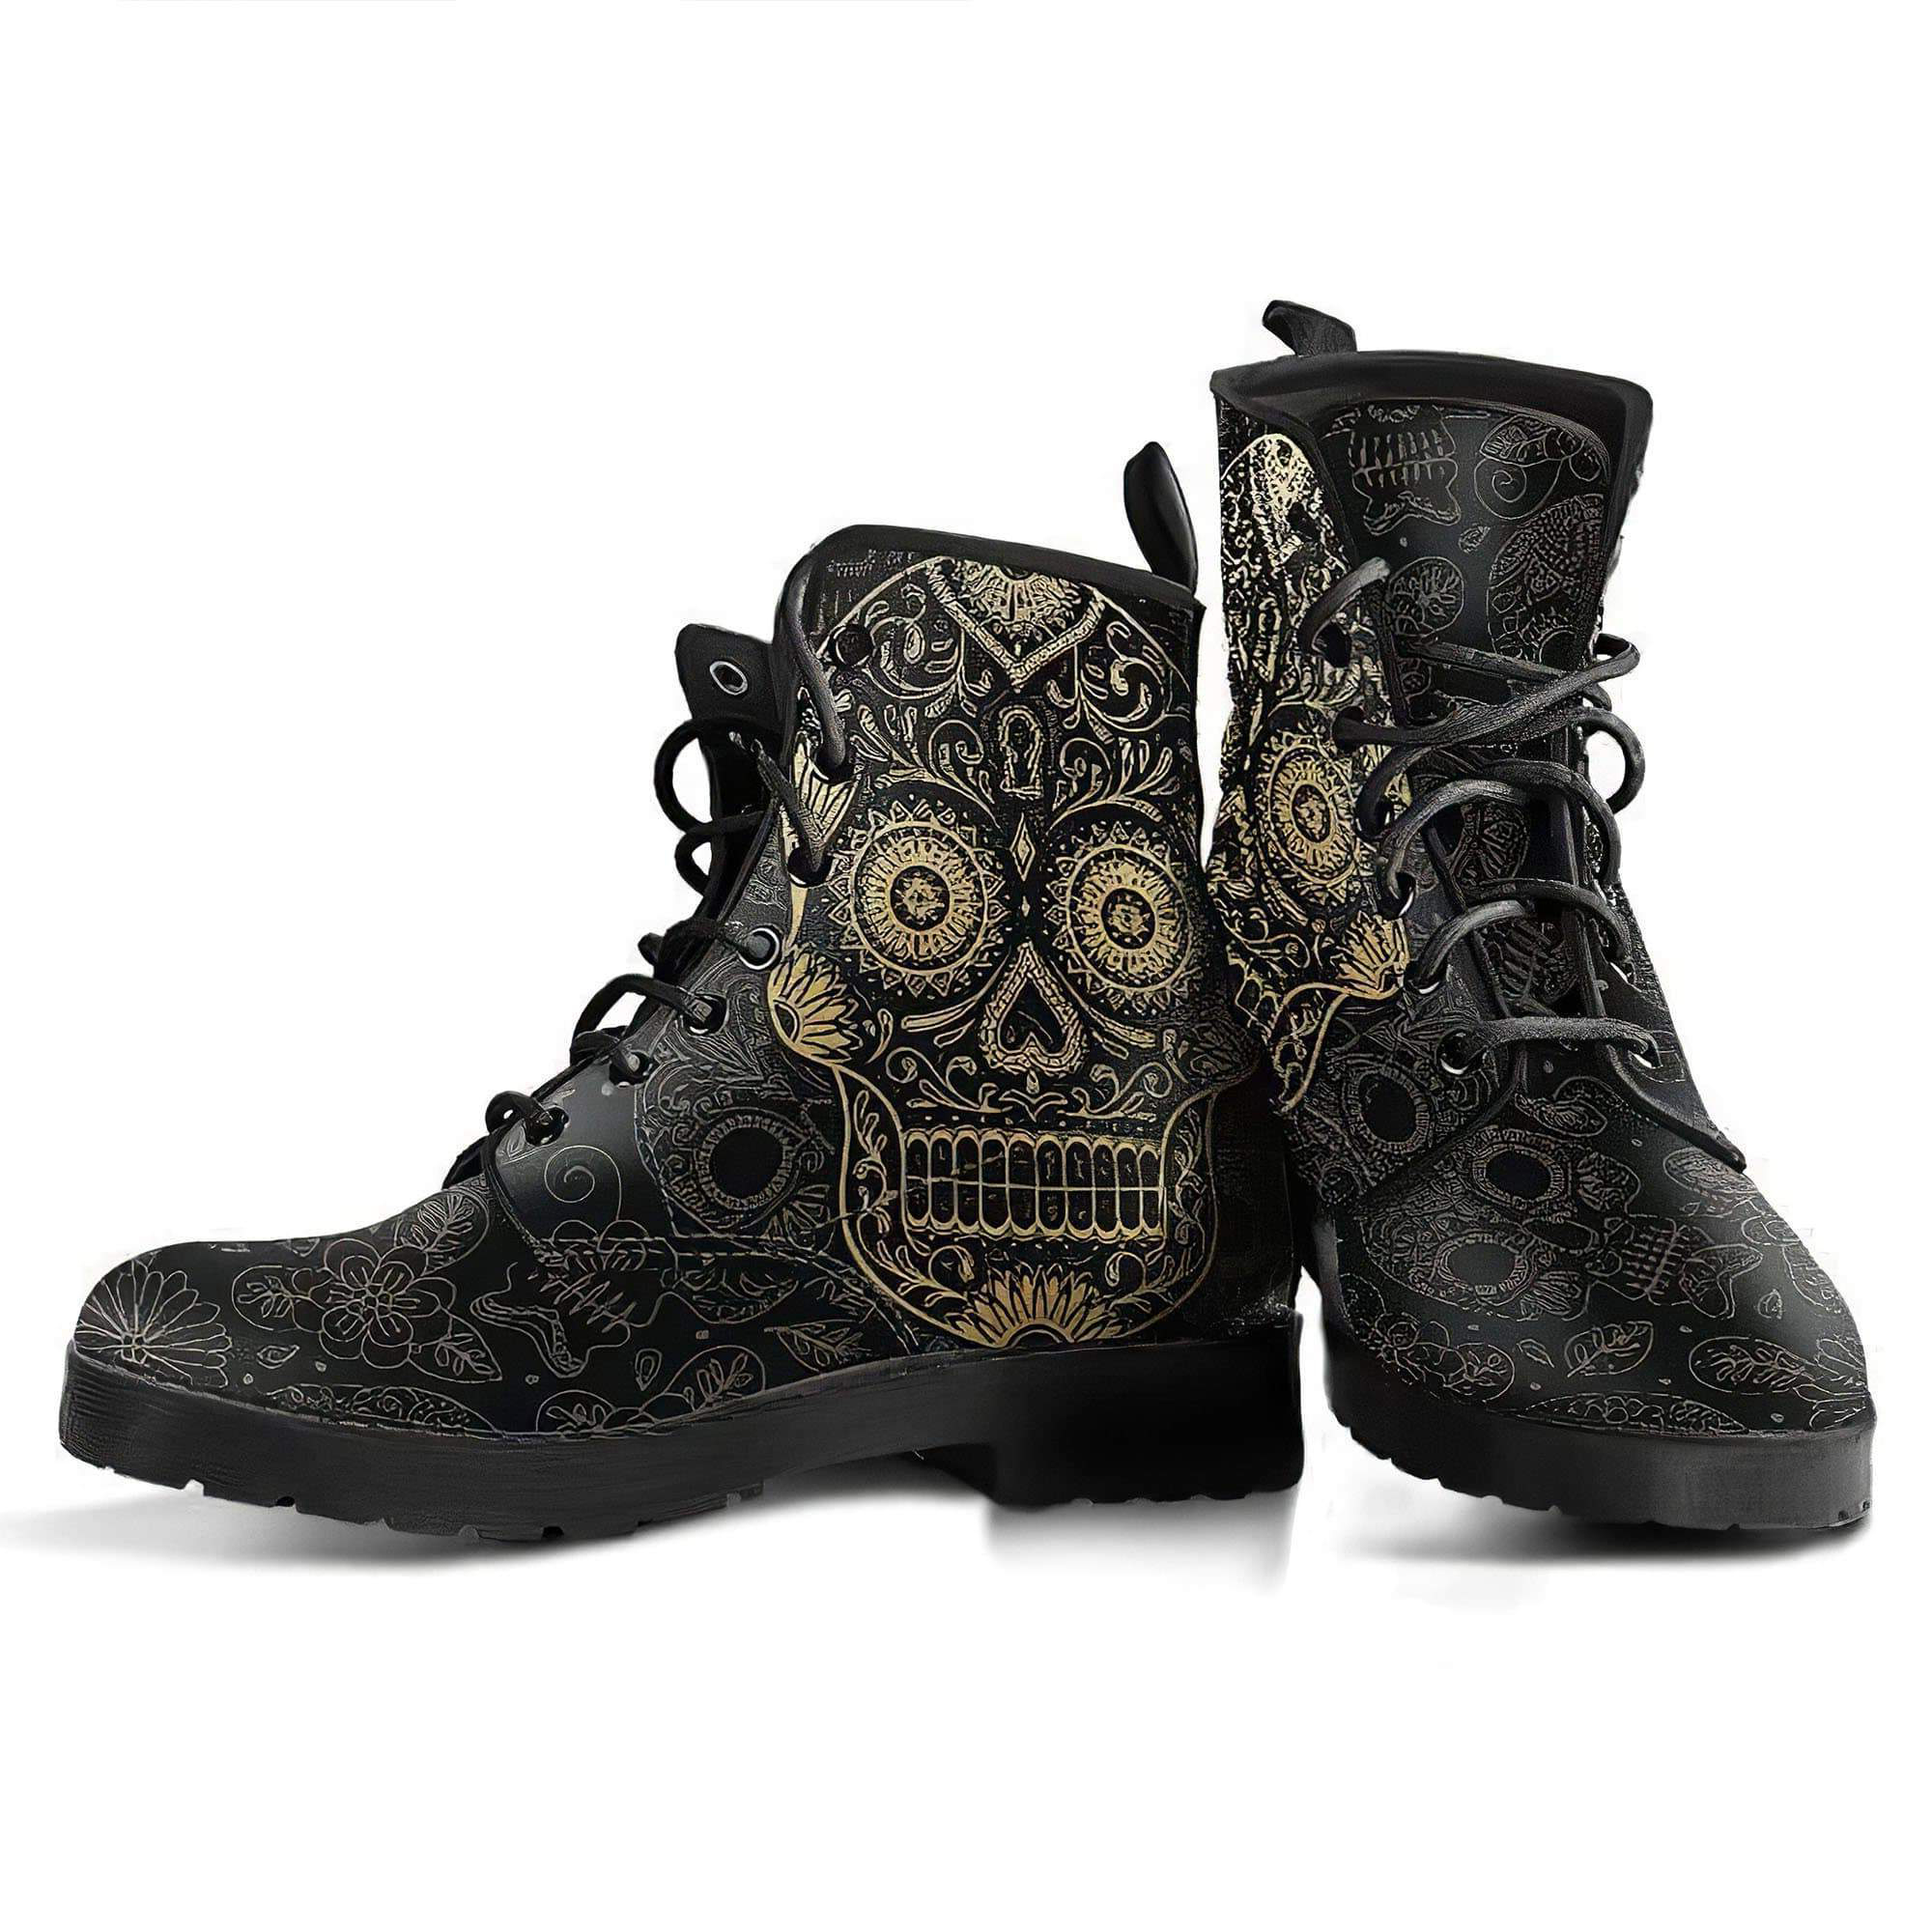 sugarskull-1-women-s-boots-vegan-friendly-leather-women-s-leather-boots-12051953254461.jpg